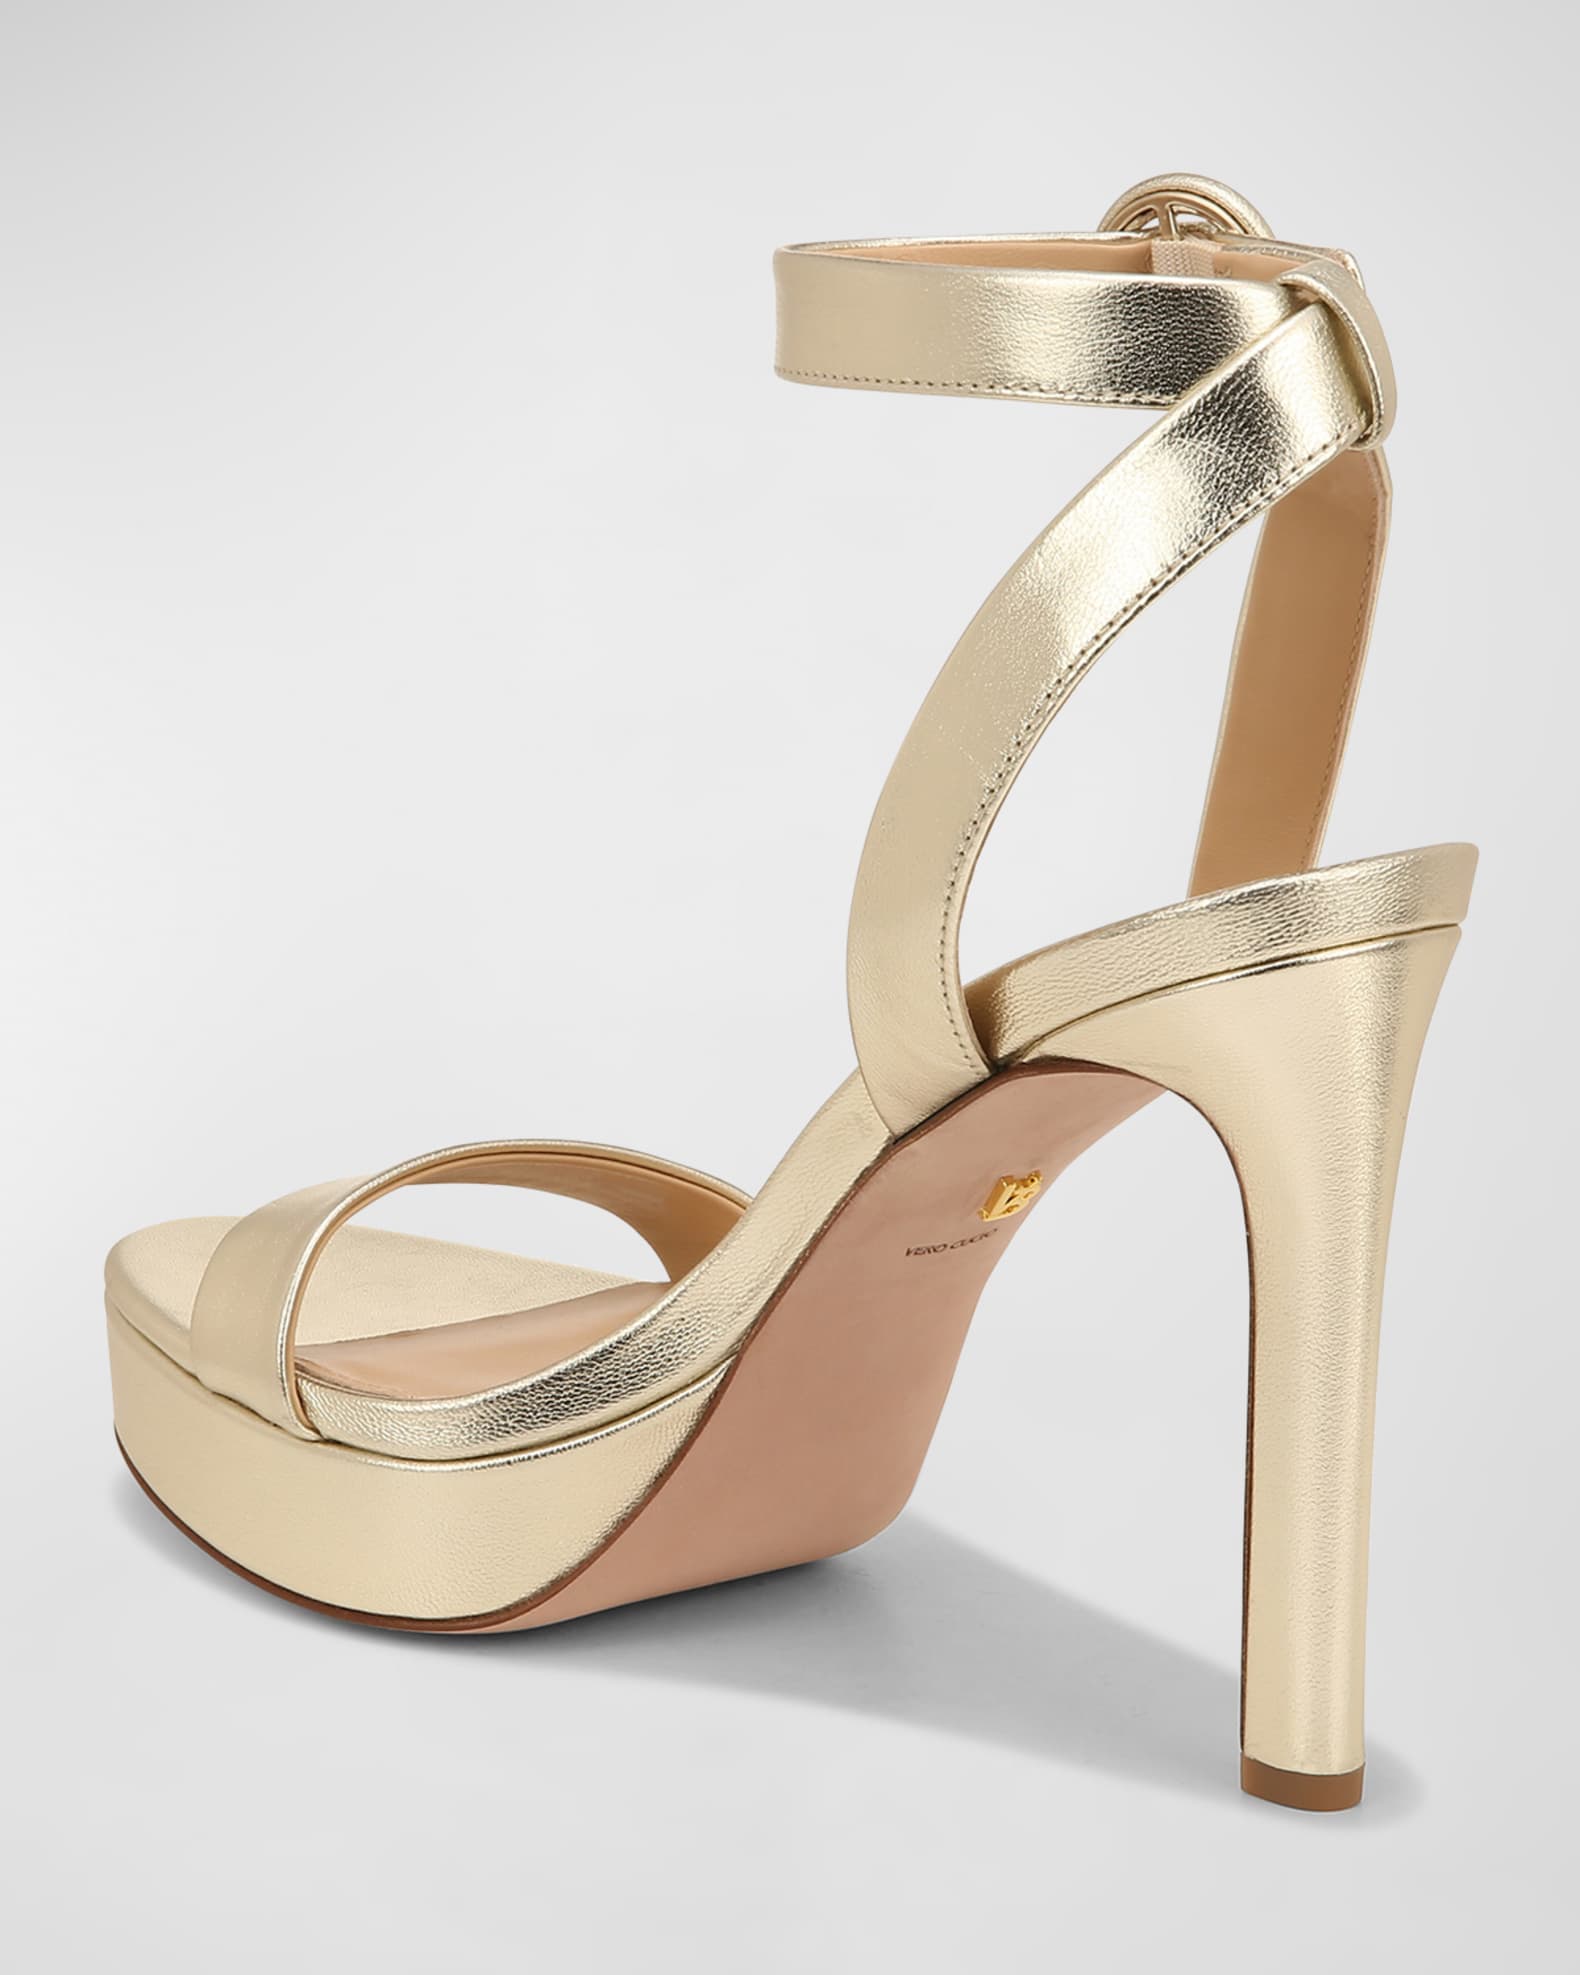 Veronica Beard Darcelle Metallic Ankle-Strap Sandals | Neiman Marcus